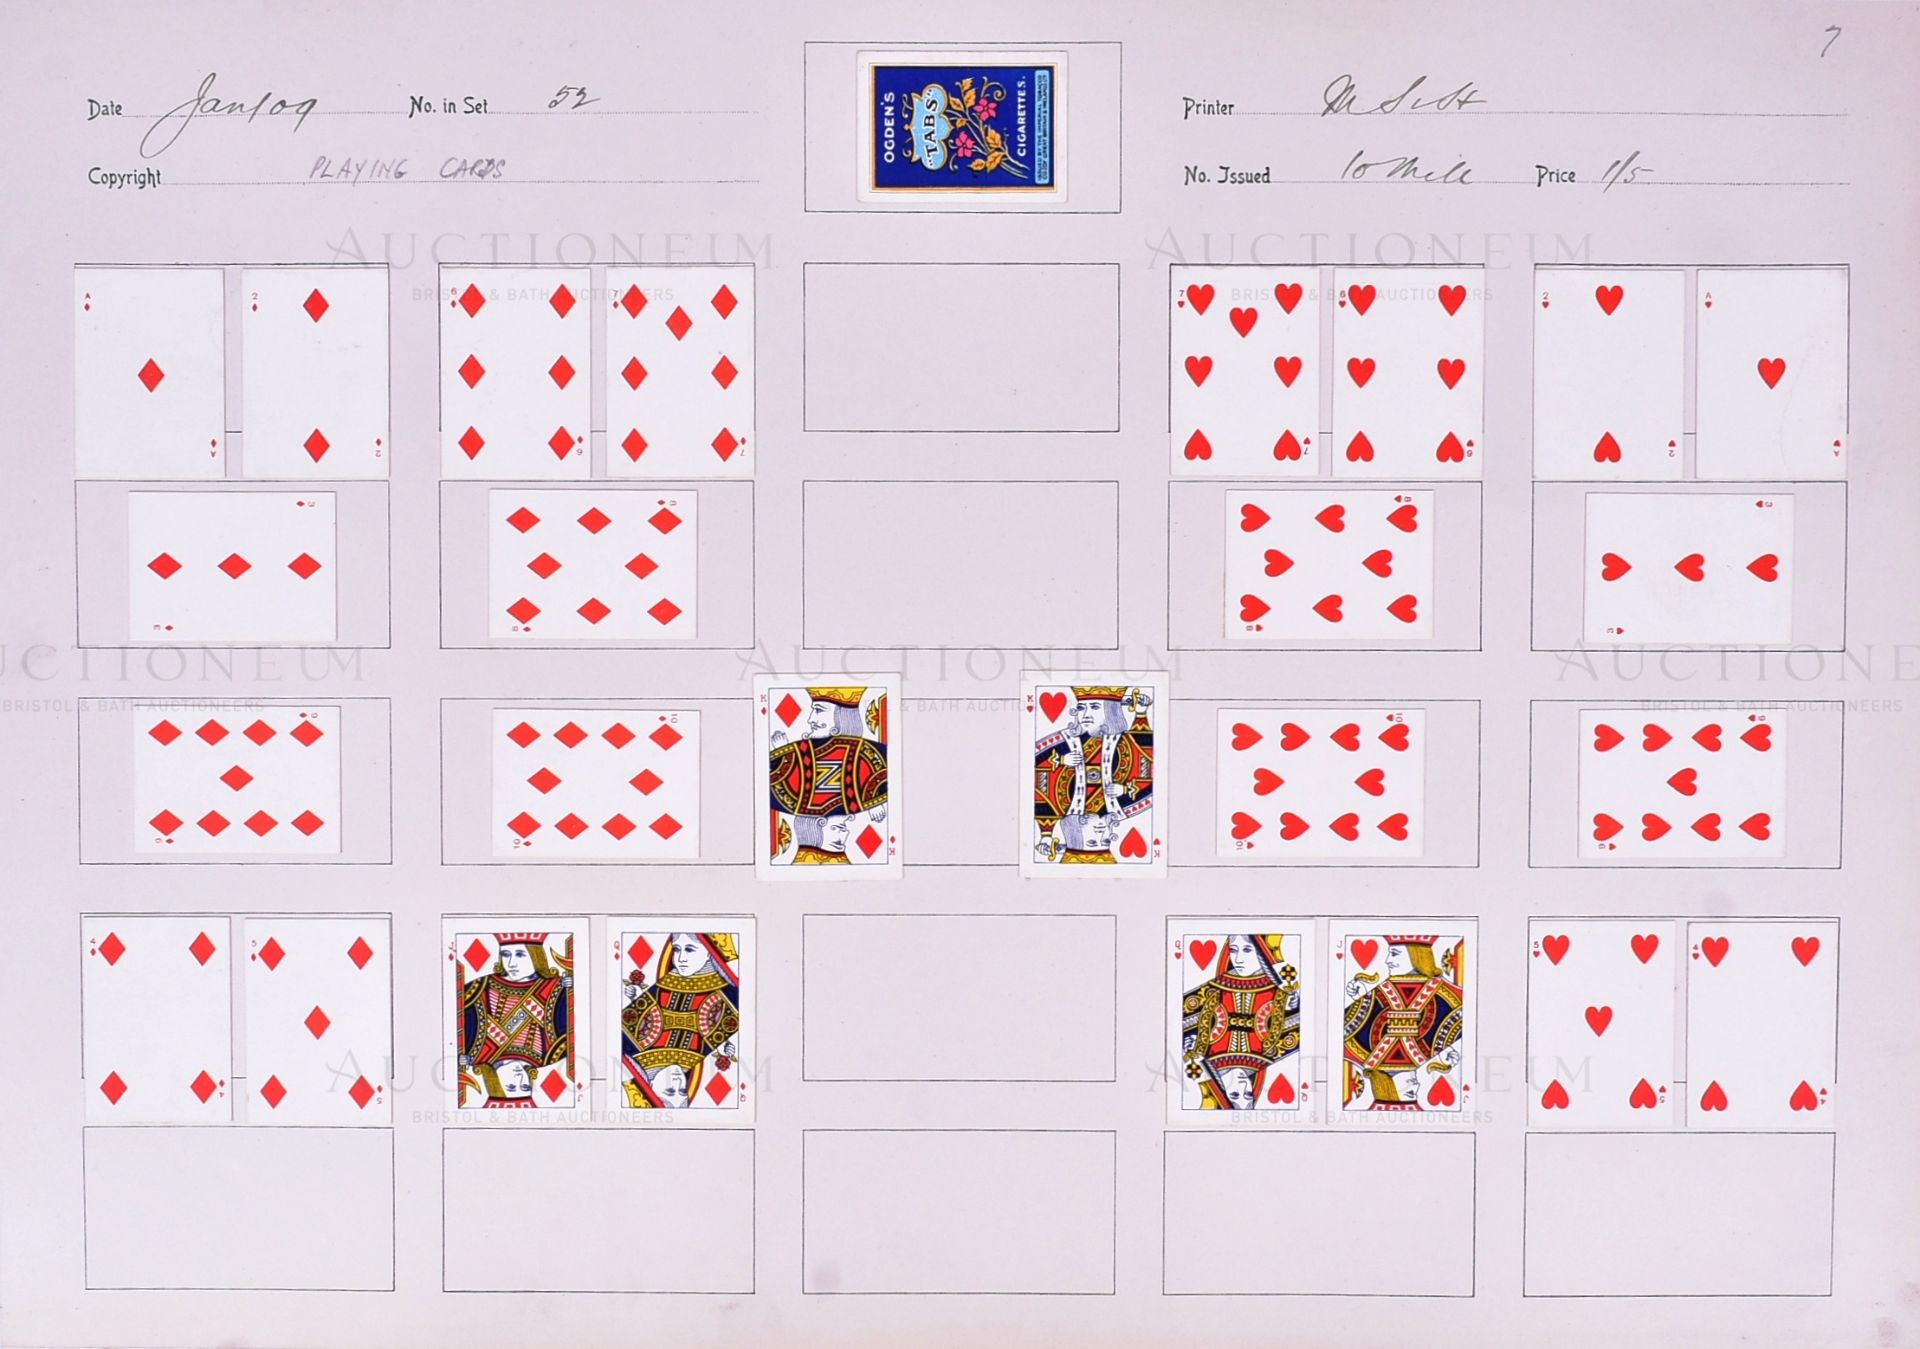 MARDON, SON & HALL - CIGARETTE CARDS - ORIGINAL PROOF CARDS - Image 2 of 5